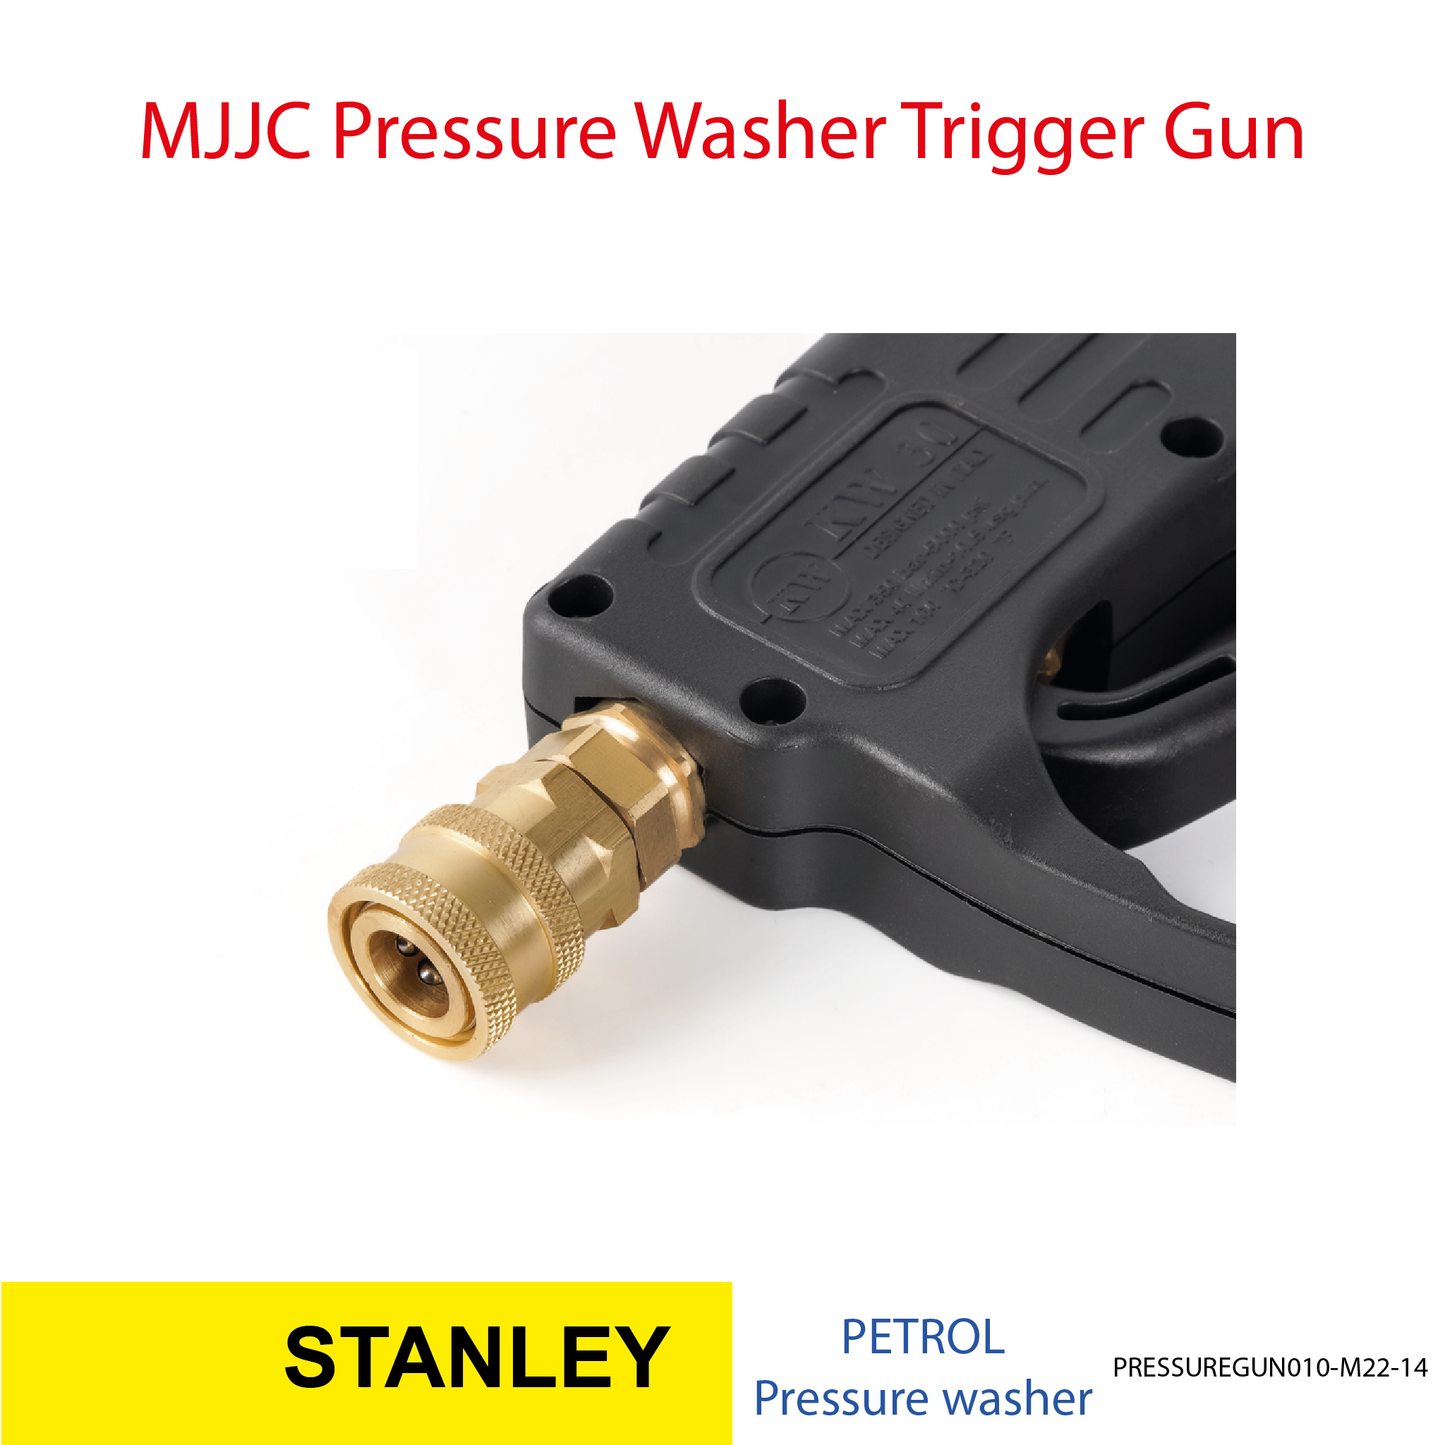 Stanley Petrol Pressure Washer - MJJC Light Weight Trigger Spray Gun with Live Swivel